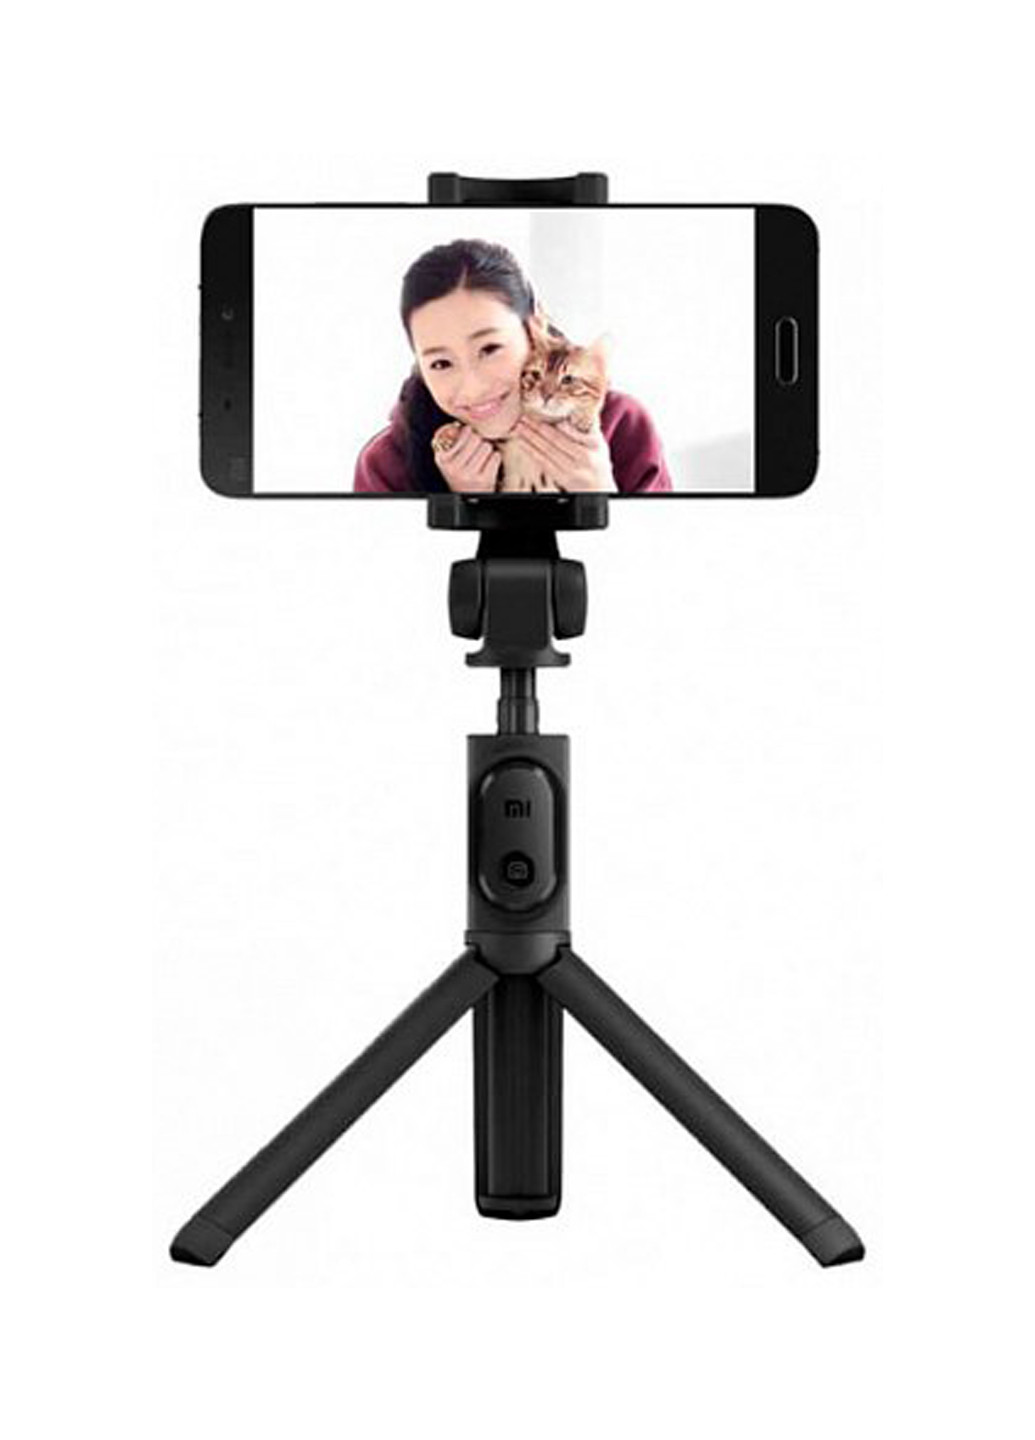 Монопод для Селфі Mi Selfie Stick Tripod Black (FBA4053CN / FBA4070US) Xiaomi mi selfie stick tripod black (fba4053cn/fba4070us) (139062655)